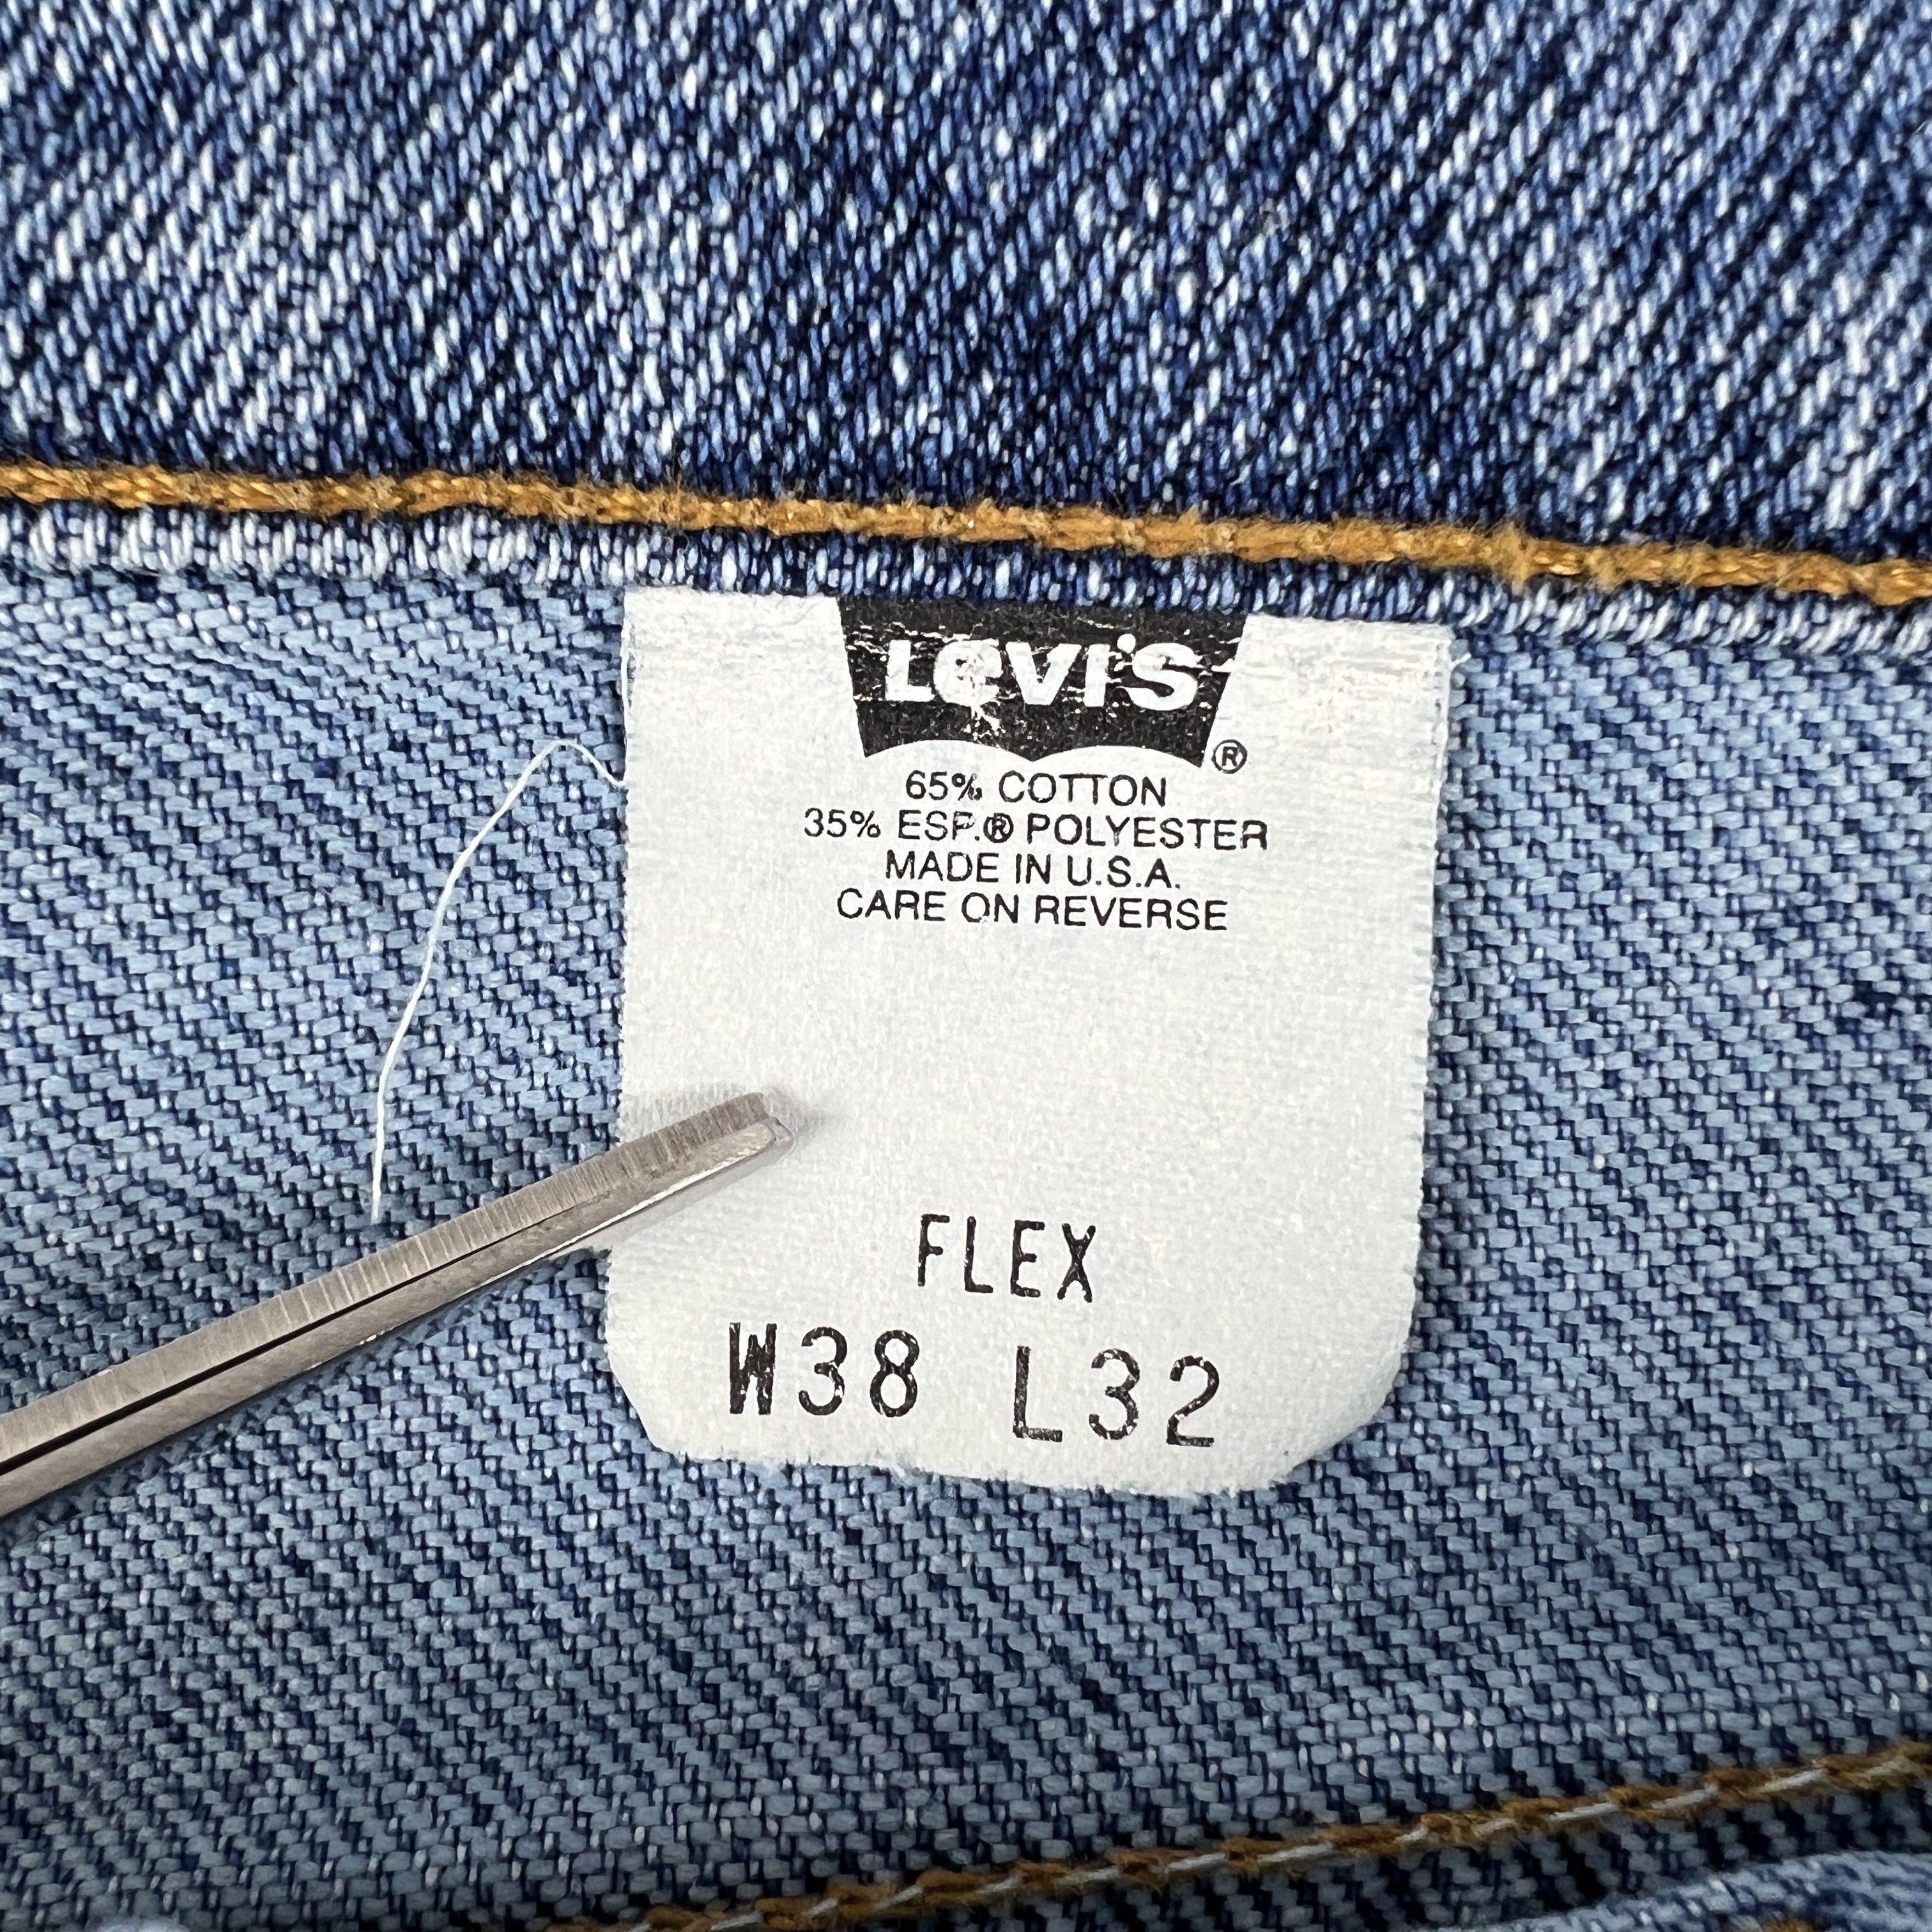 Vintage VTG 90s Levi's Jeans 540 Flex Relaxed Straight Blue Denim Size US 36 / EU 52 - 8 Thumbnail